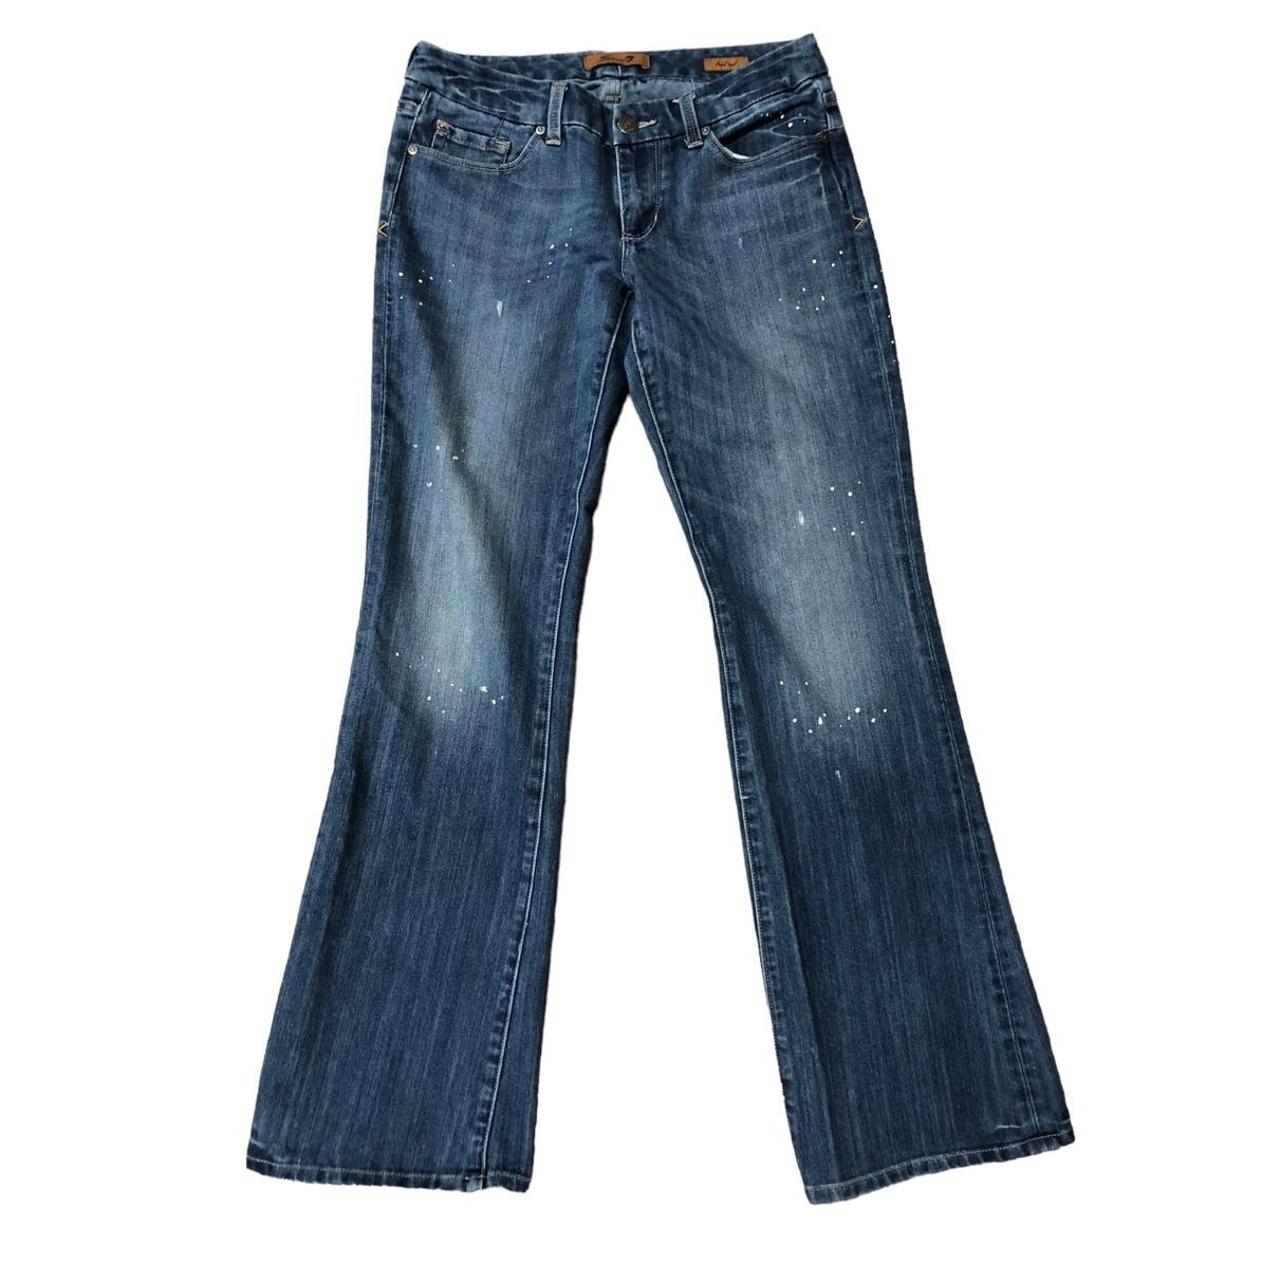 Seven7 brand jeans